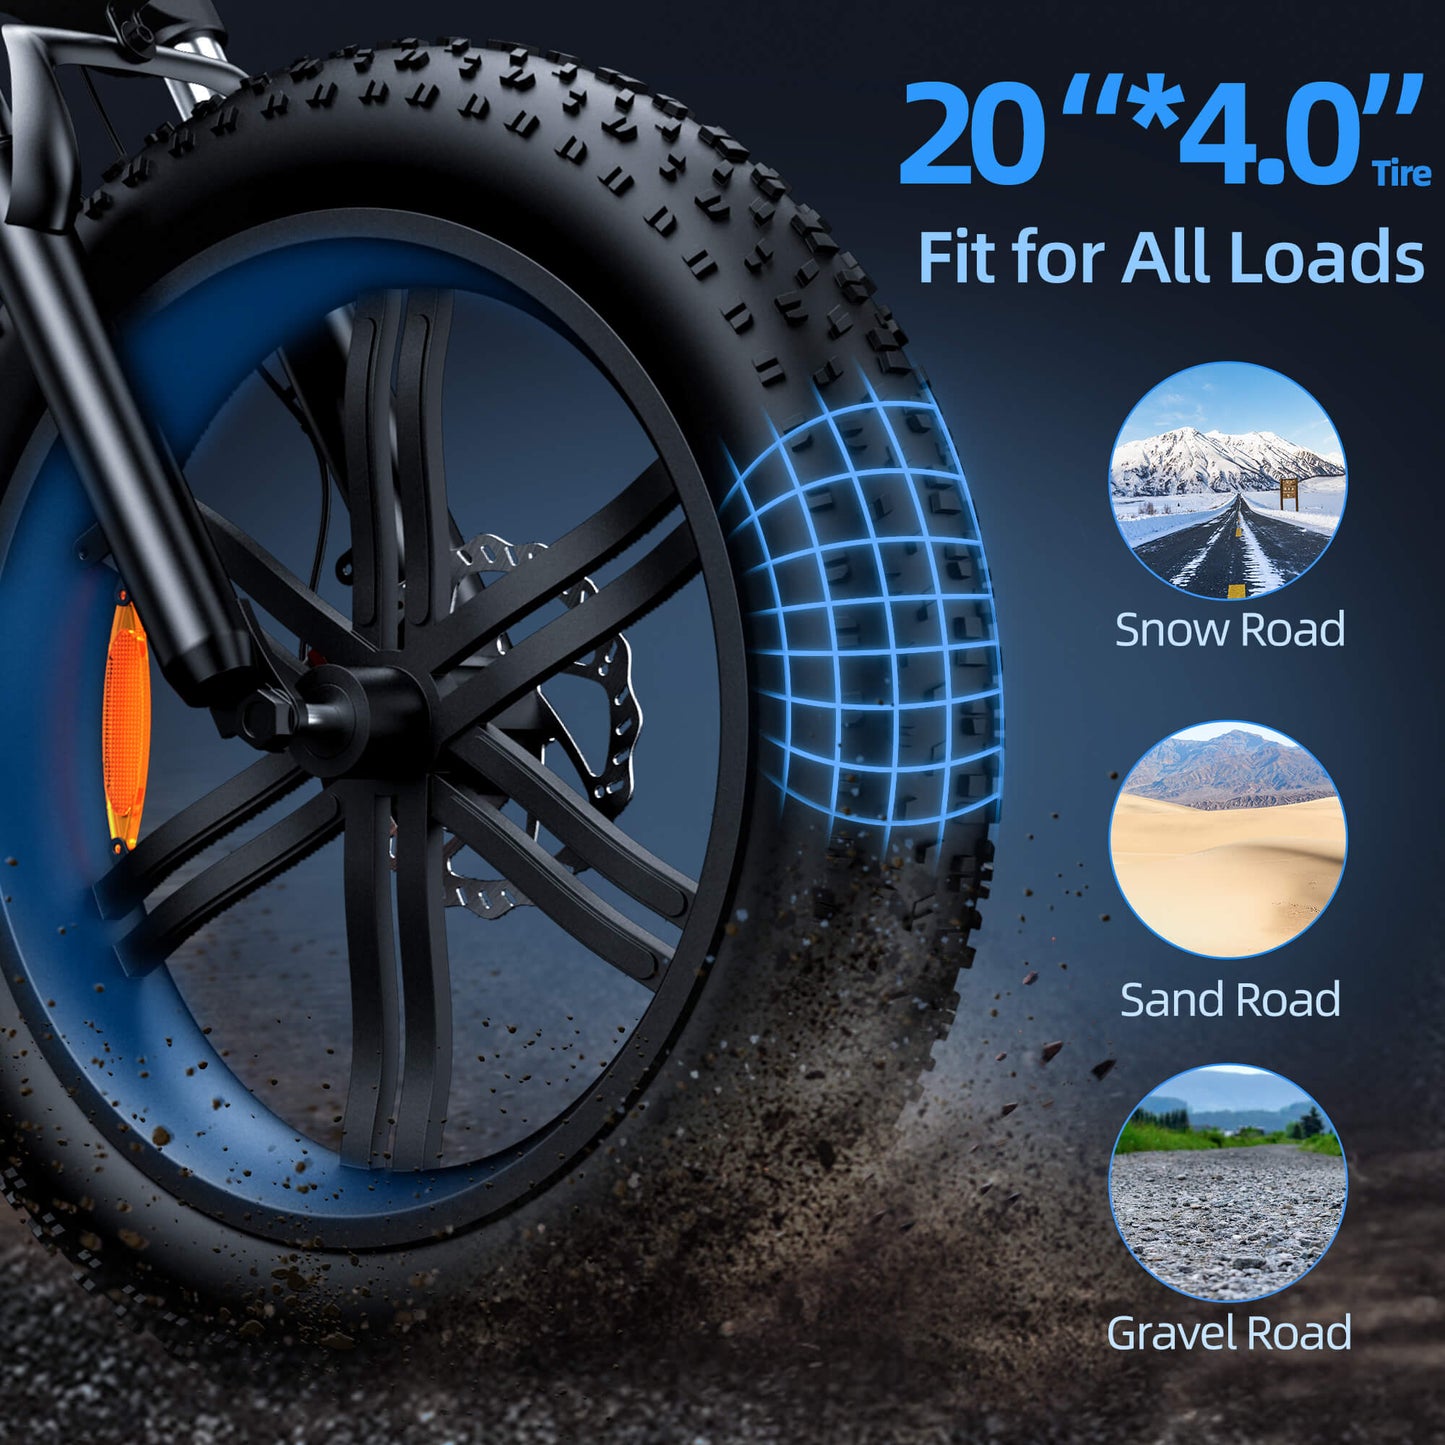 ADO A20F+ Faltbares E-Bike mit fetten Reifen und Drossel